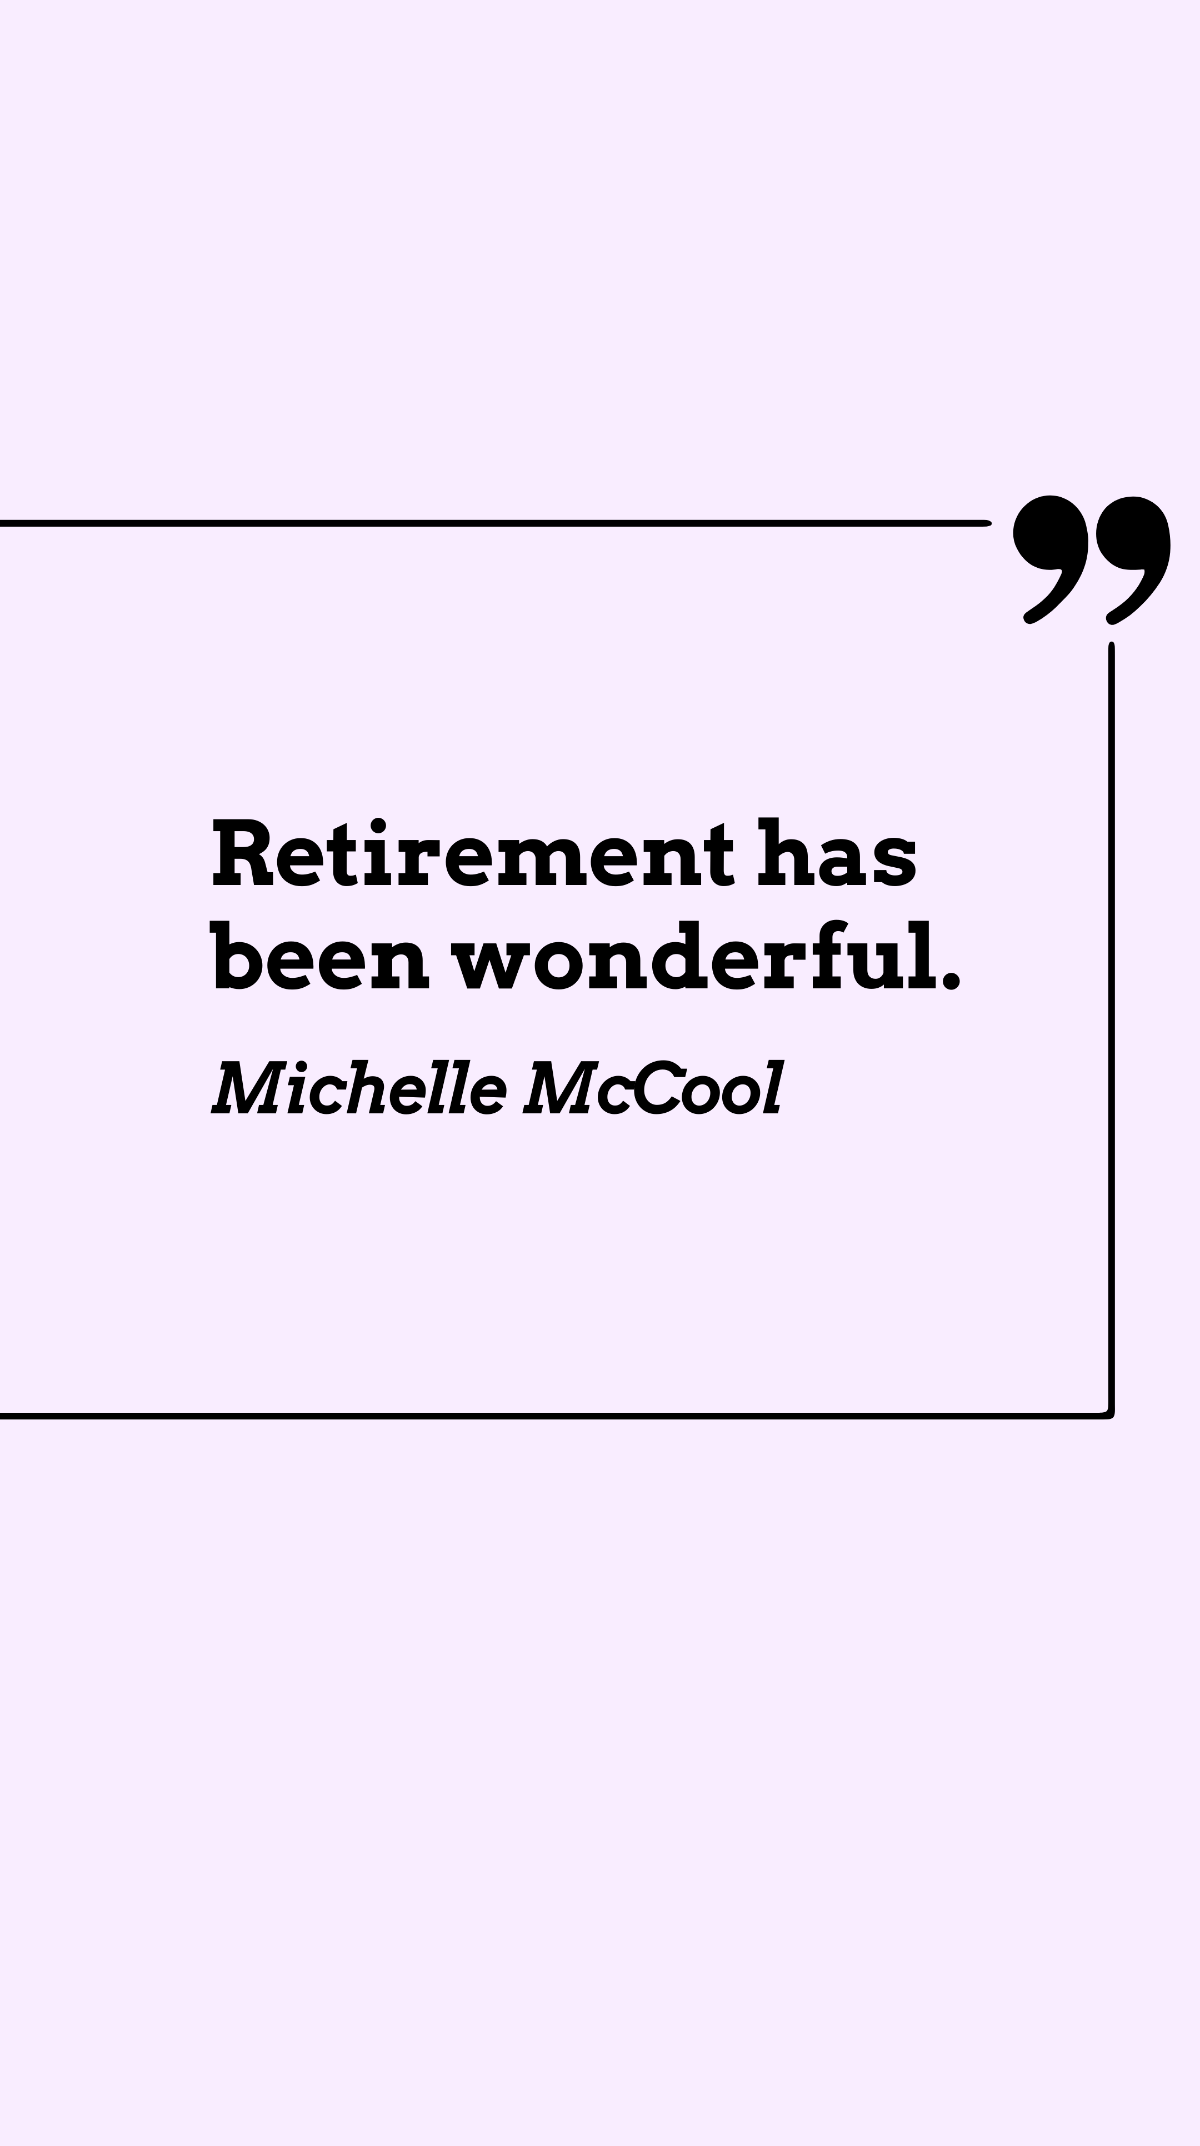 Michelle McCool - Retirement has been wonderful.